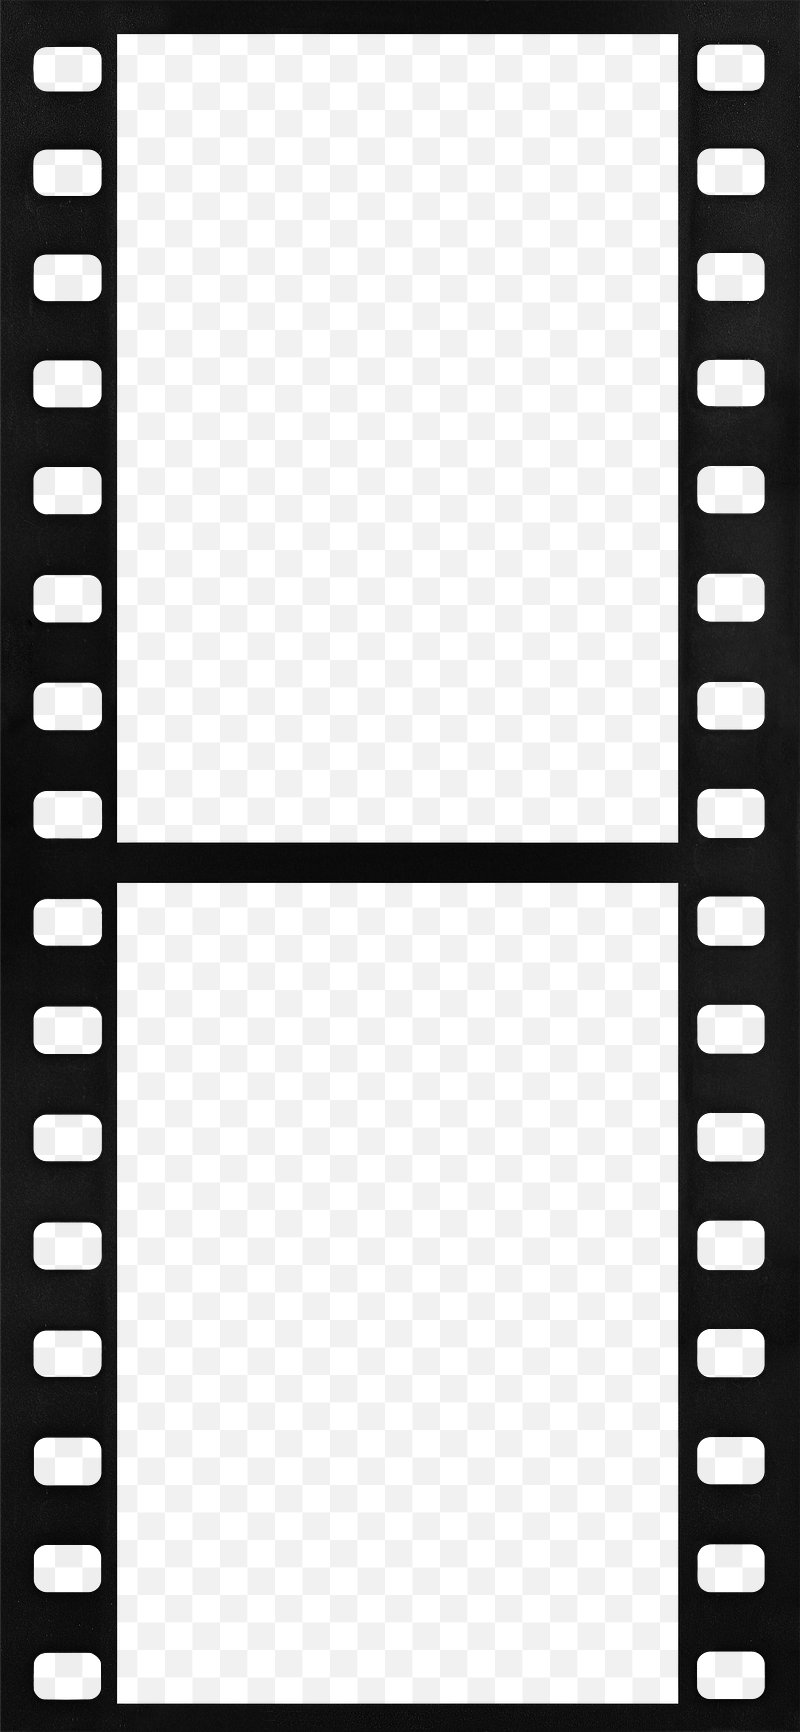 movie film frame png